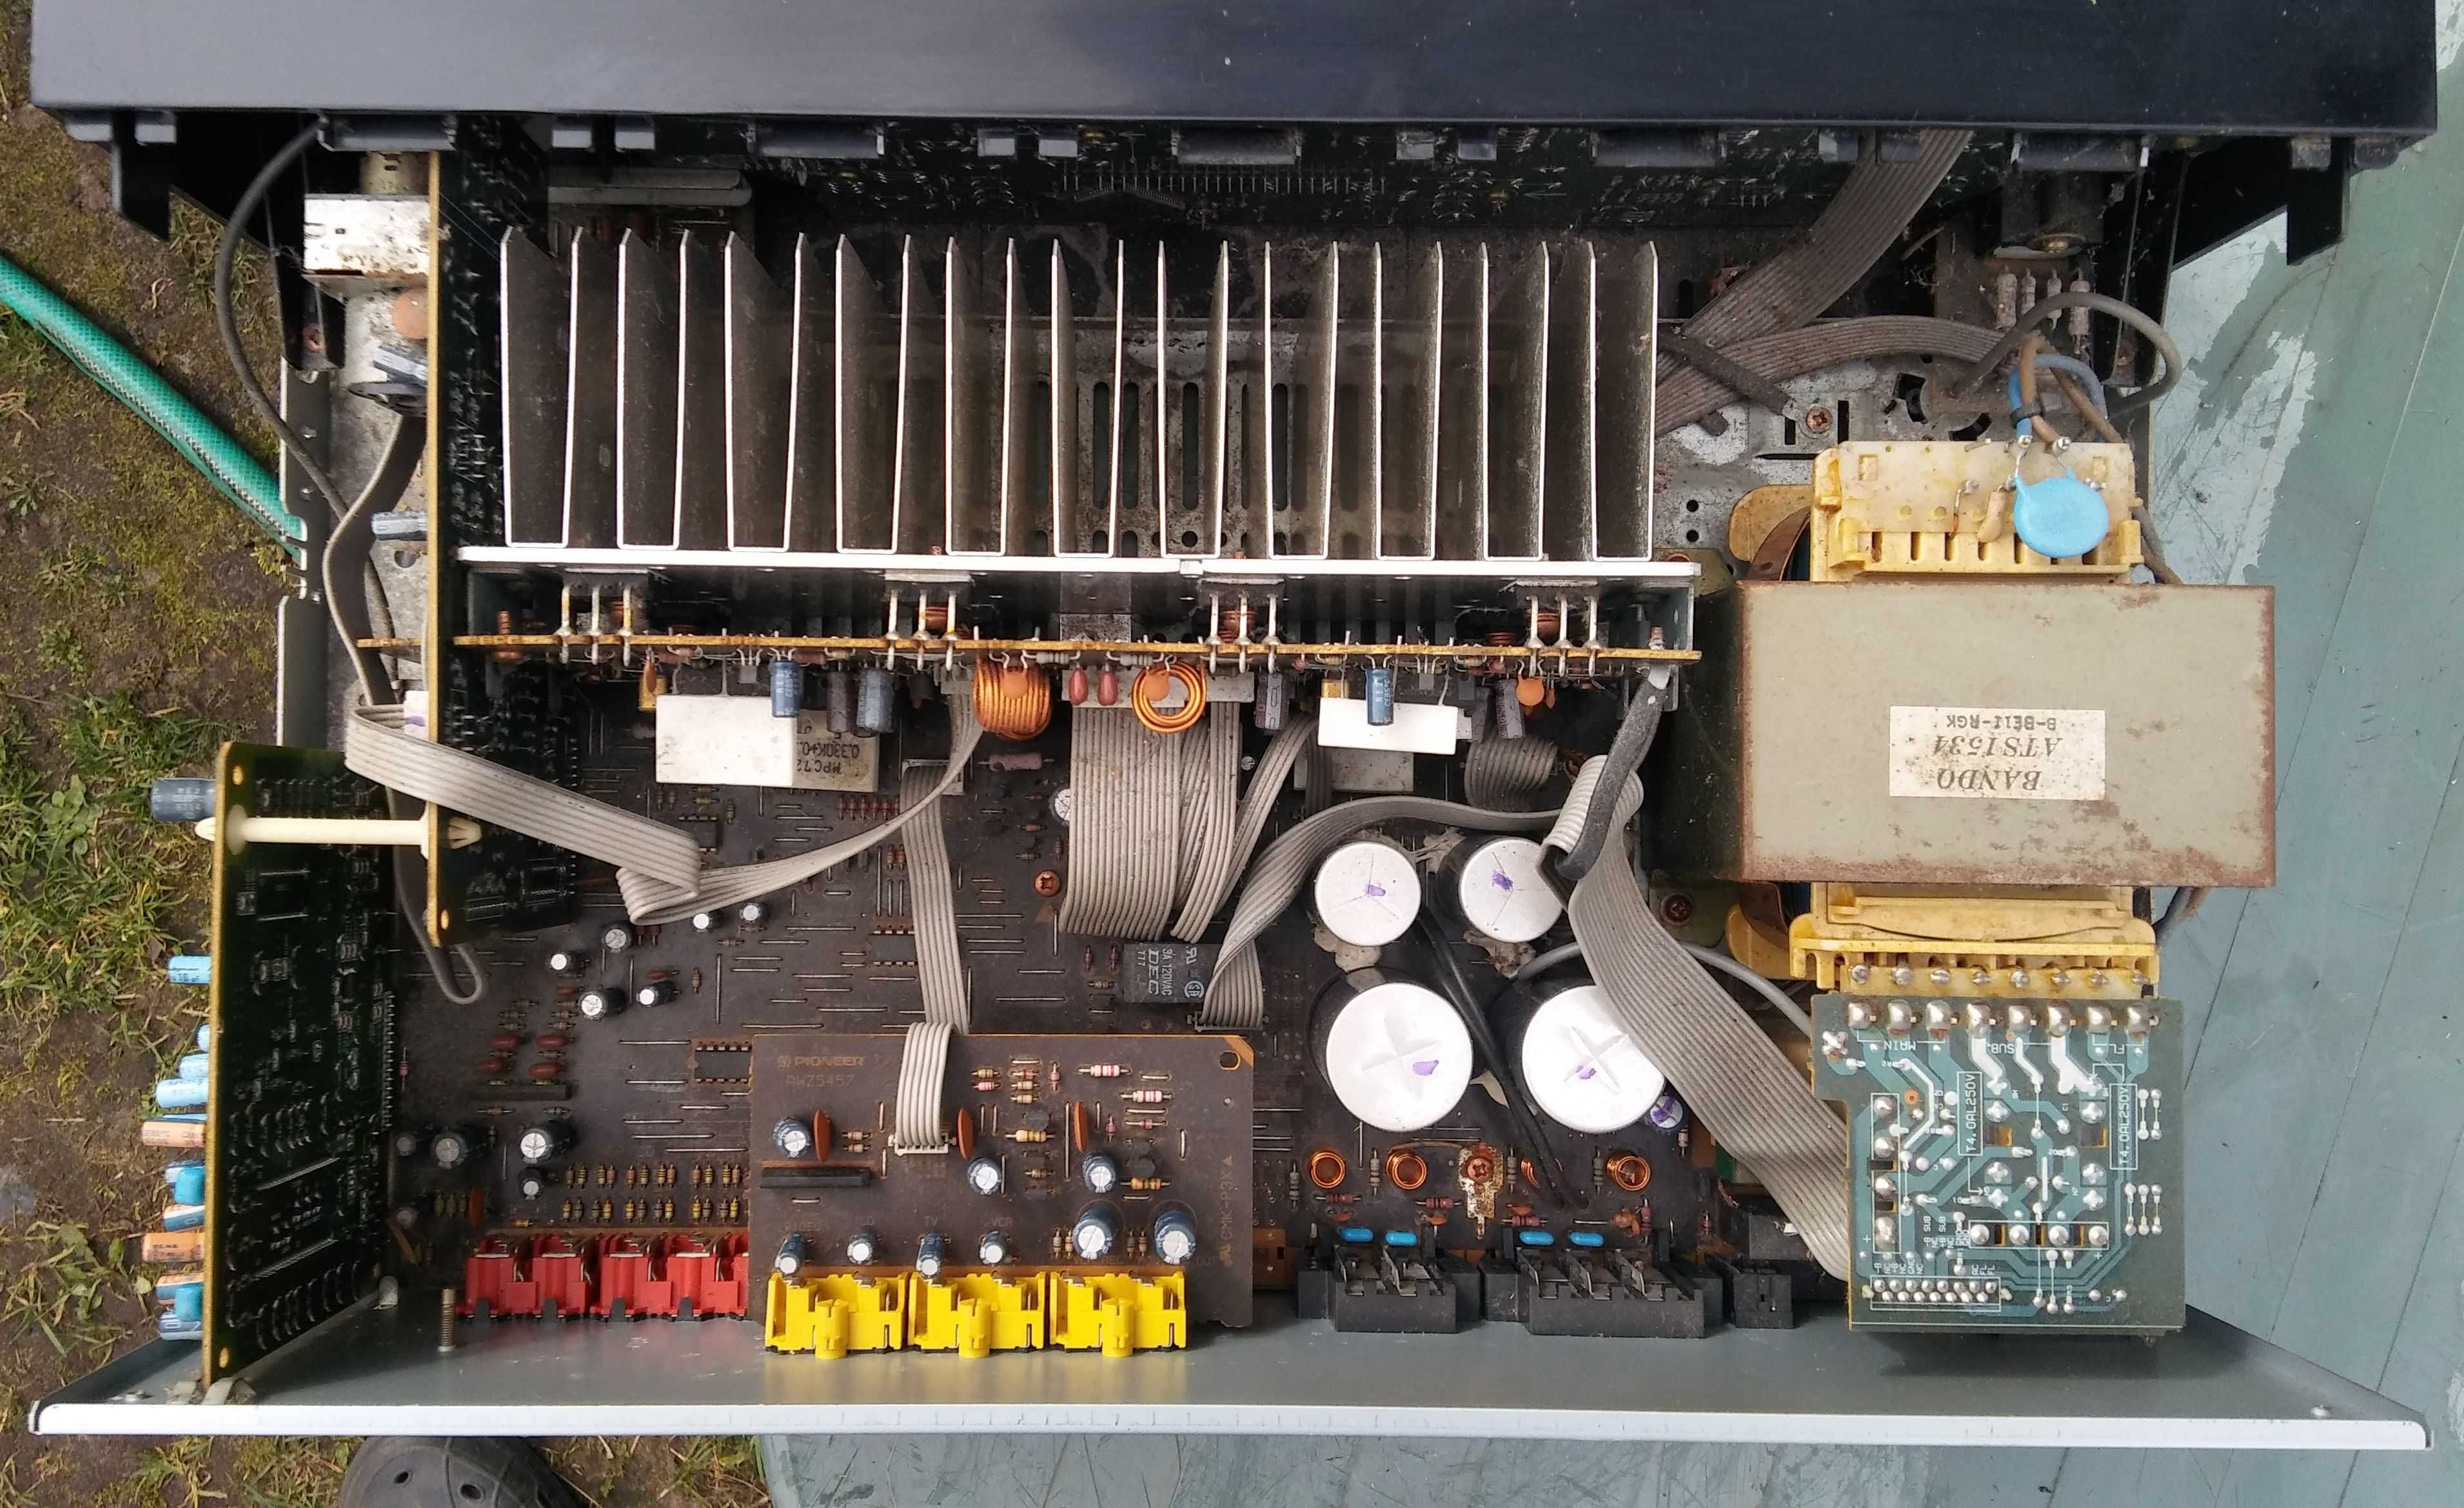 Wzmacniacz Pioneer surround amplifier VSA-303 made in Japan + Gratis